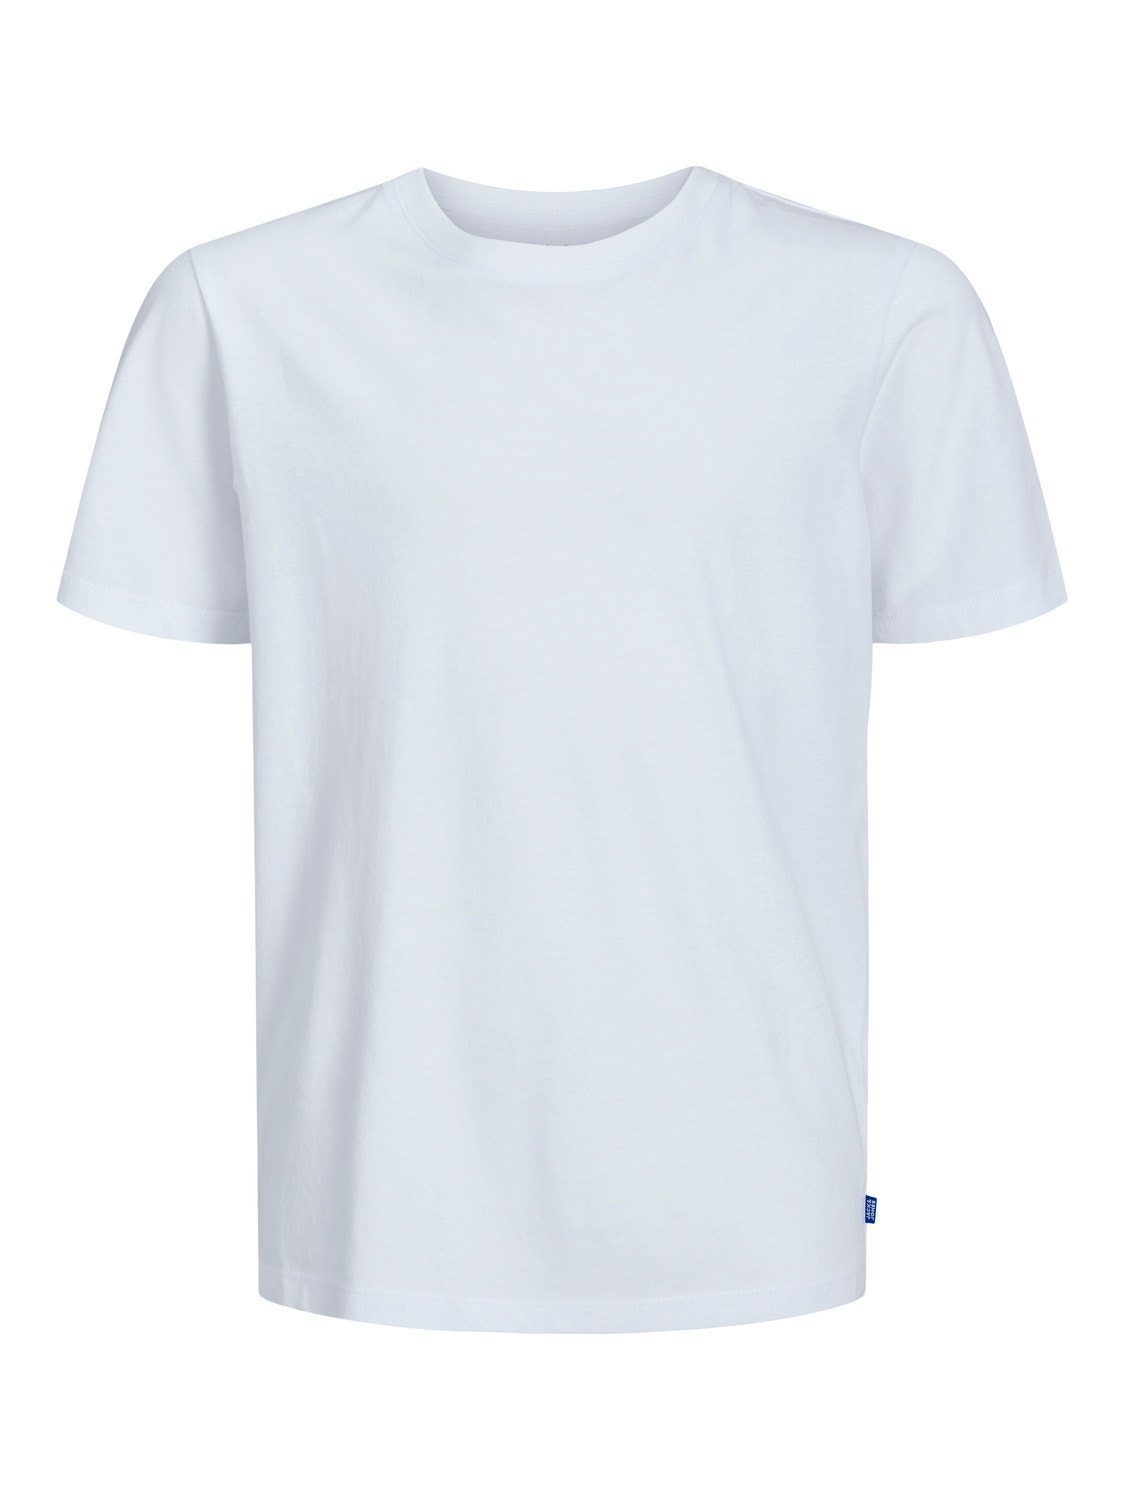 Anton T-Shirt Ml Homme JACK AND JONES BLANC pas cher - T-shirt